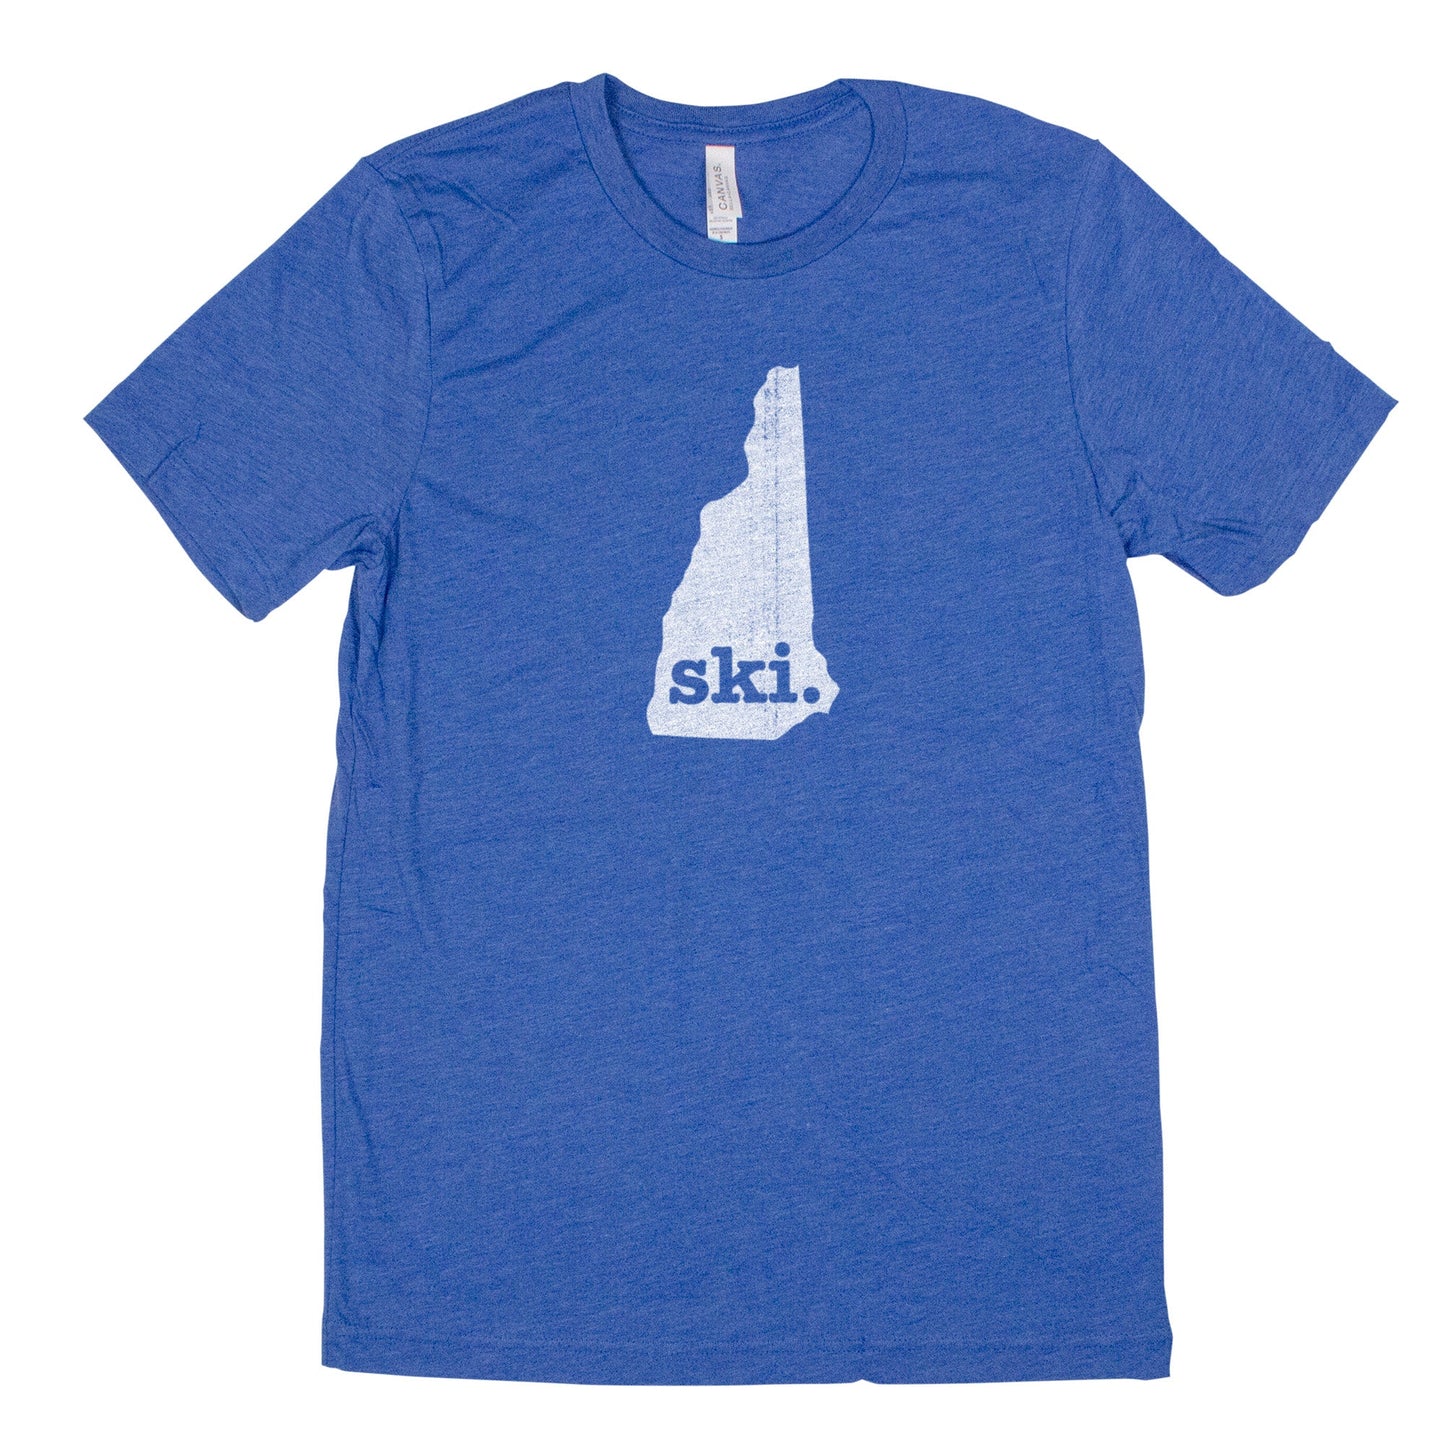 ski. Men's Unisex T-Shirt - New Hampshire